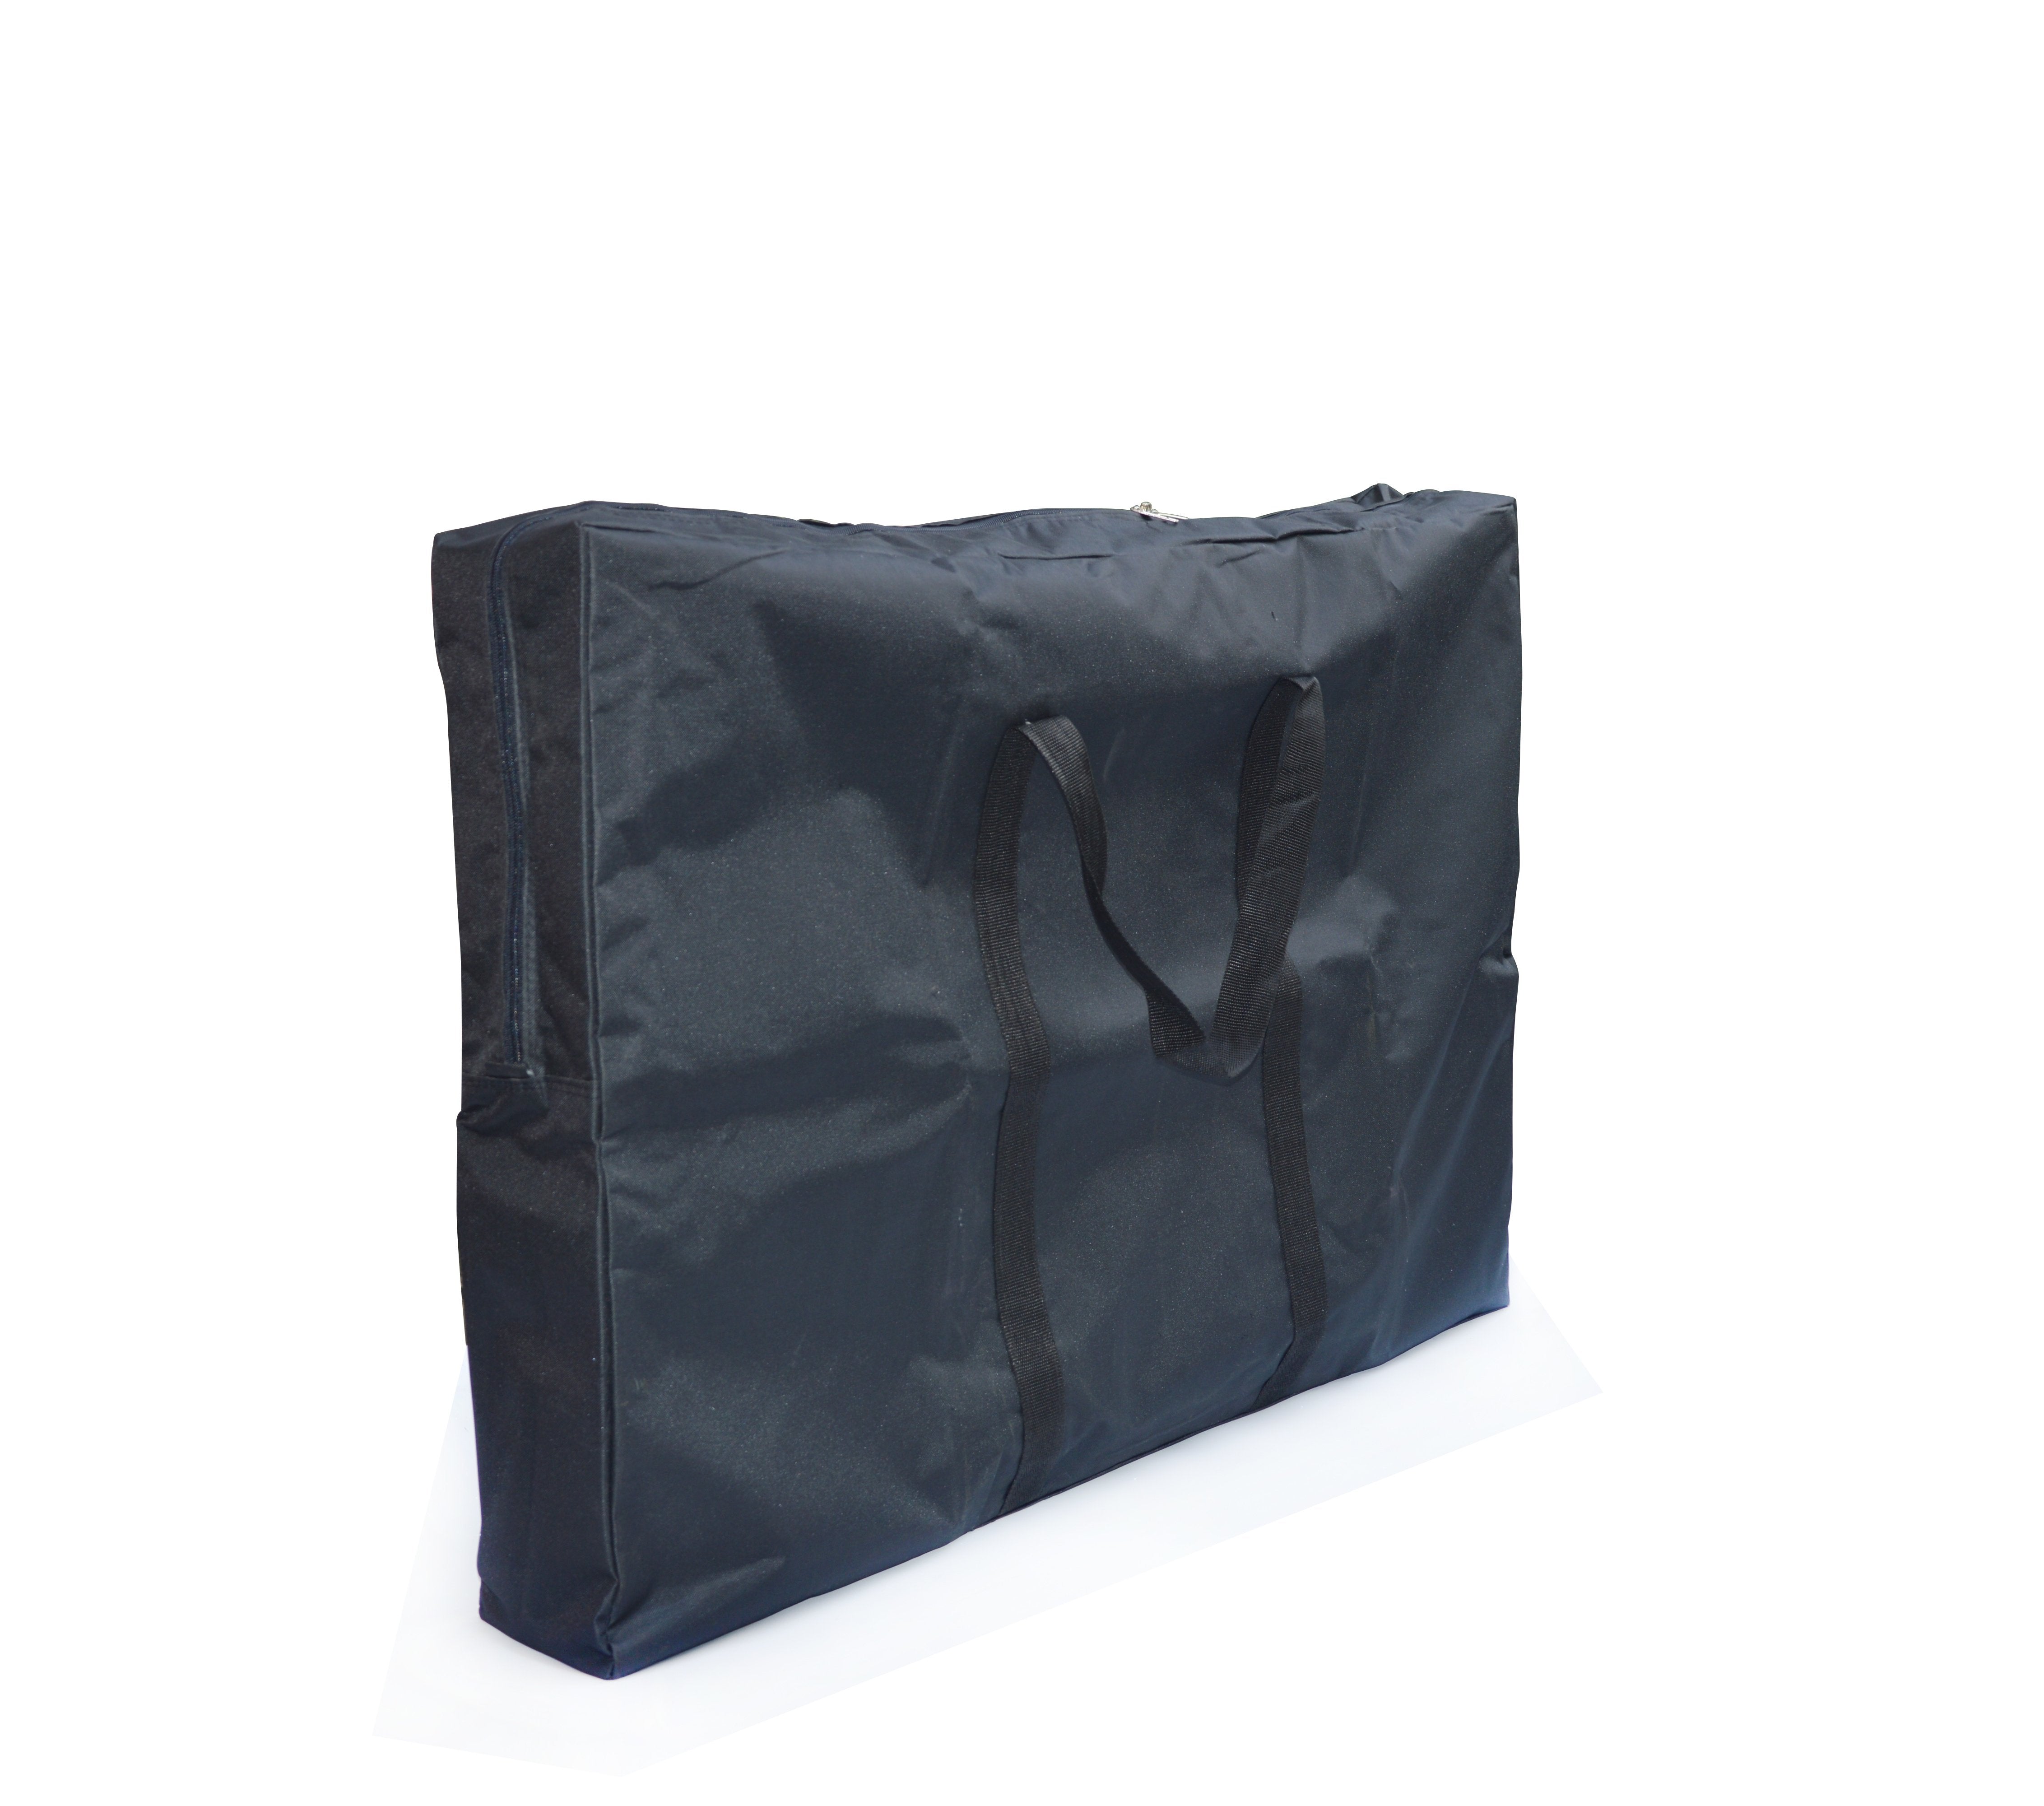 Games Bean Bag Toss Cornhole Game Set Aluminium Frame Portable Design